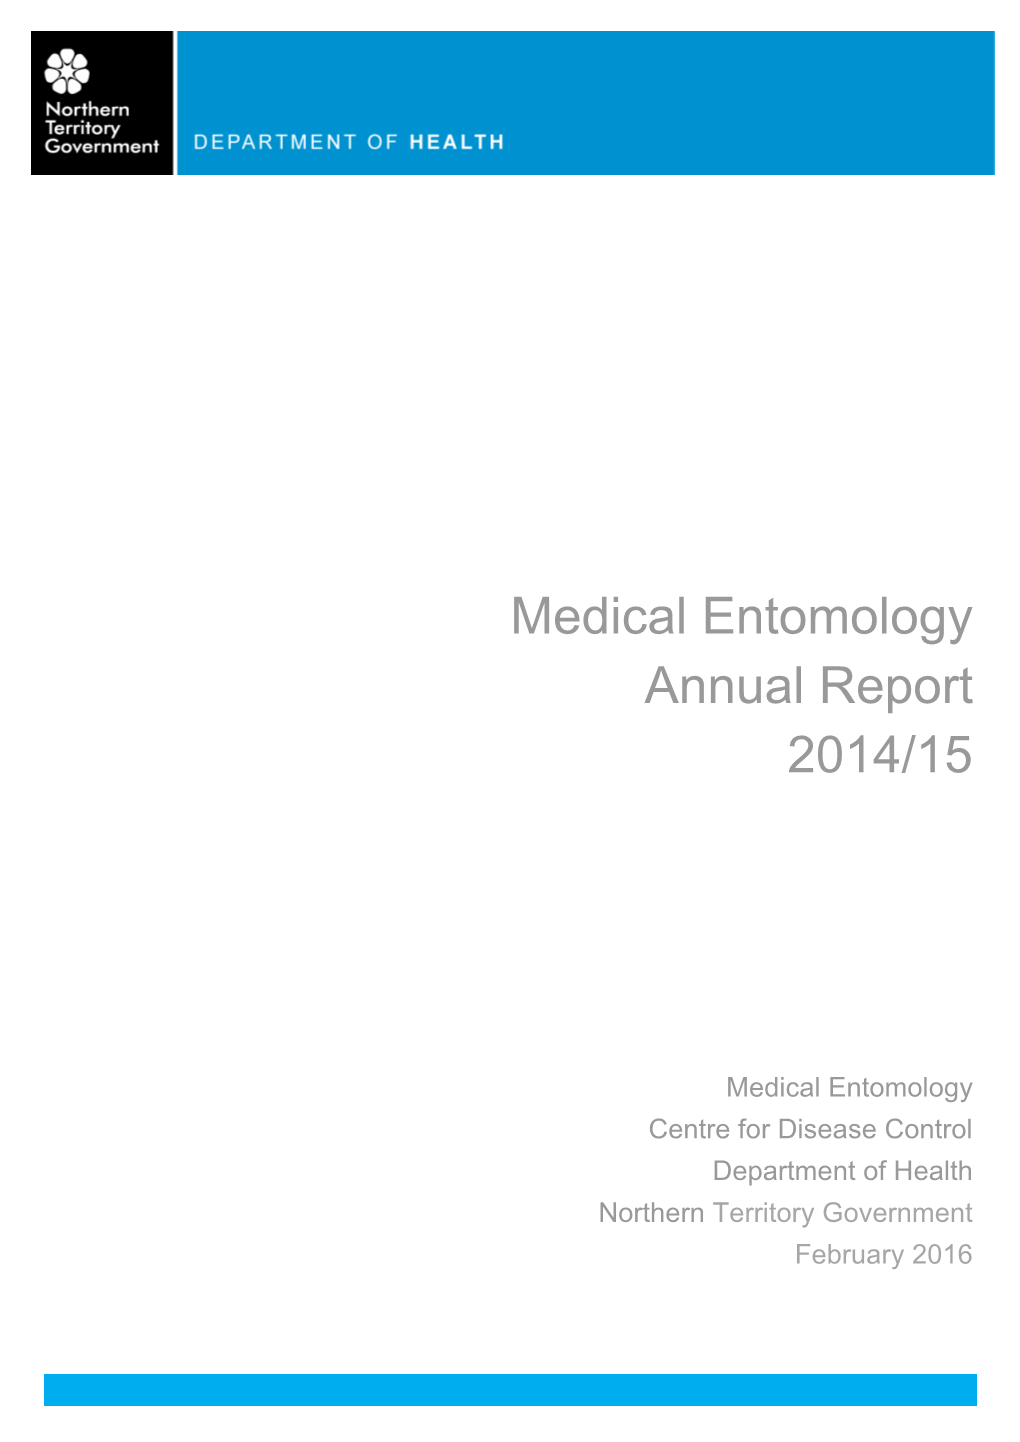 Medical Entomology Annual Report 2014/15